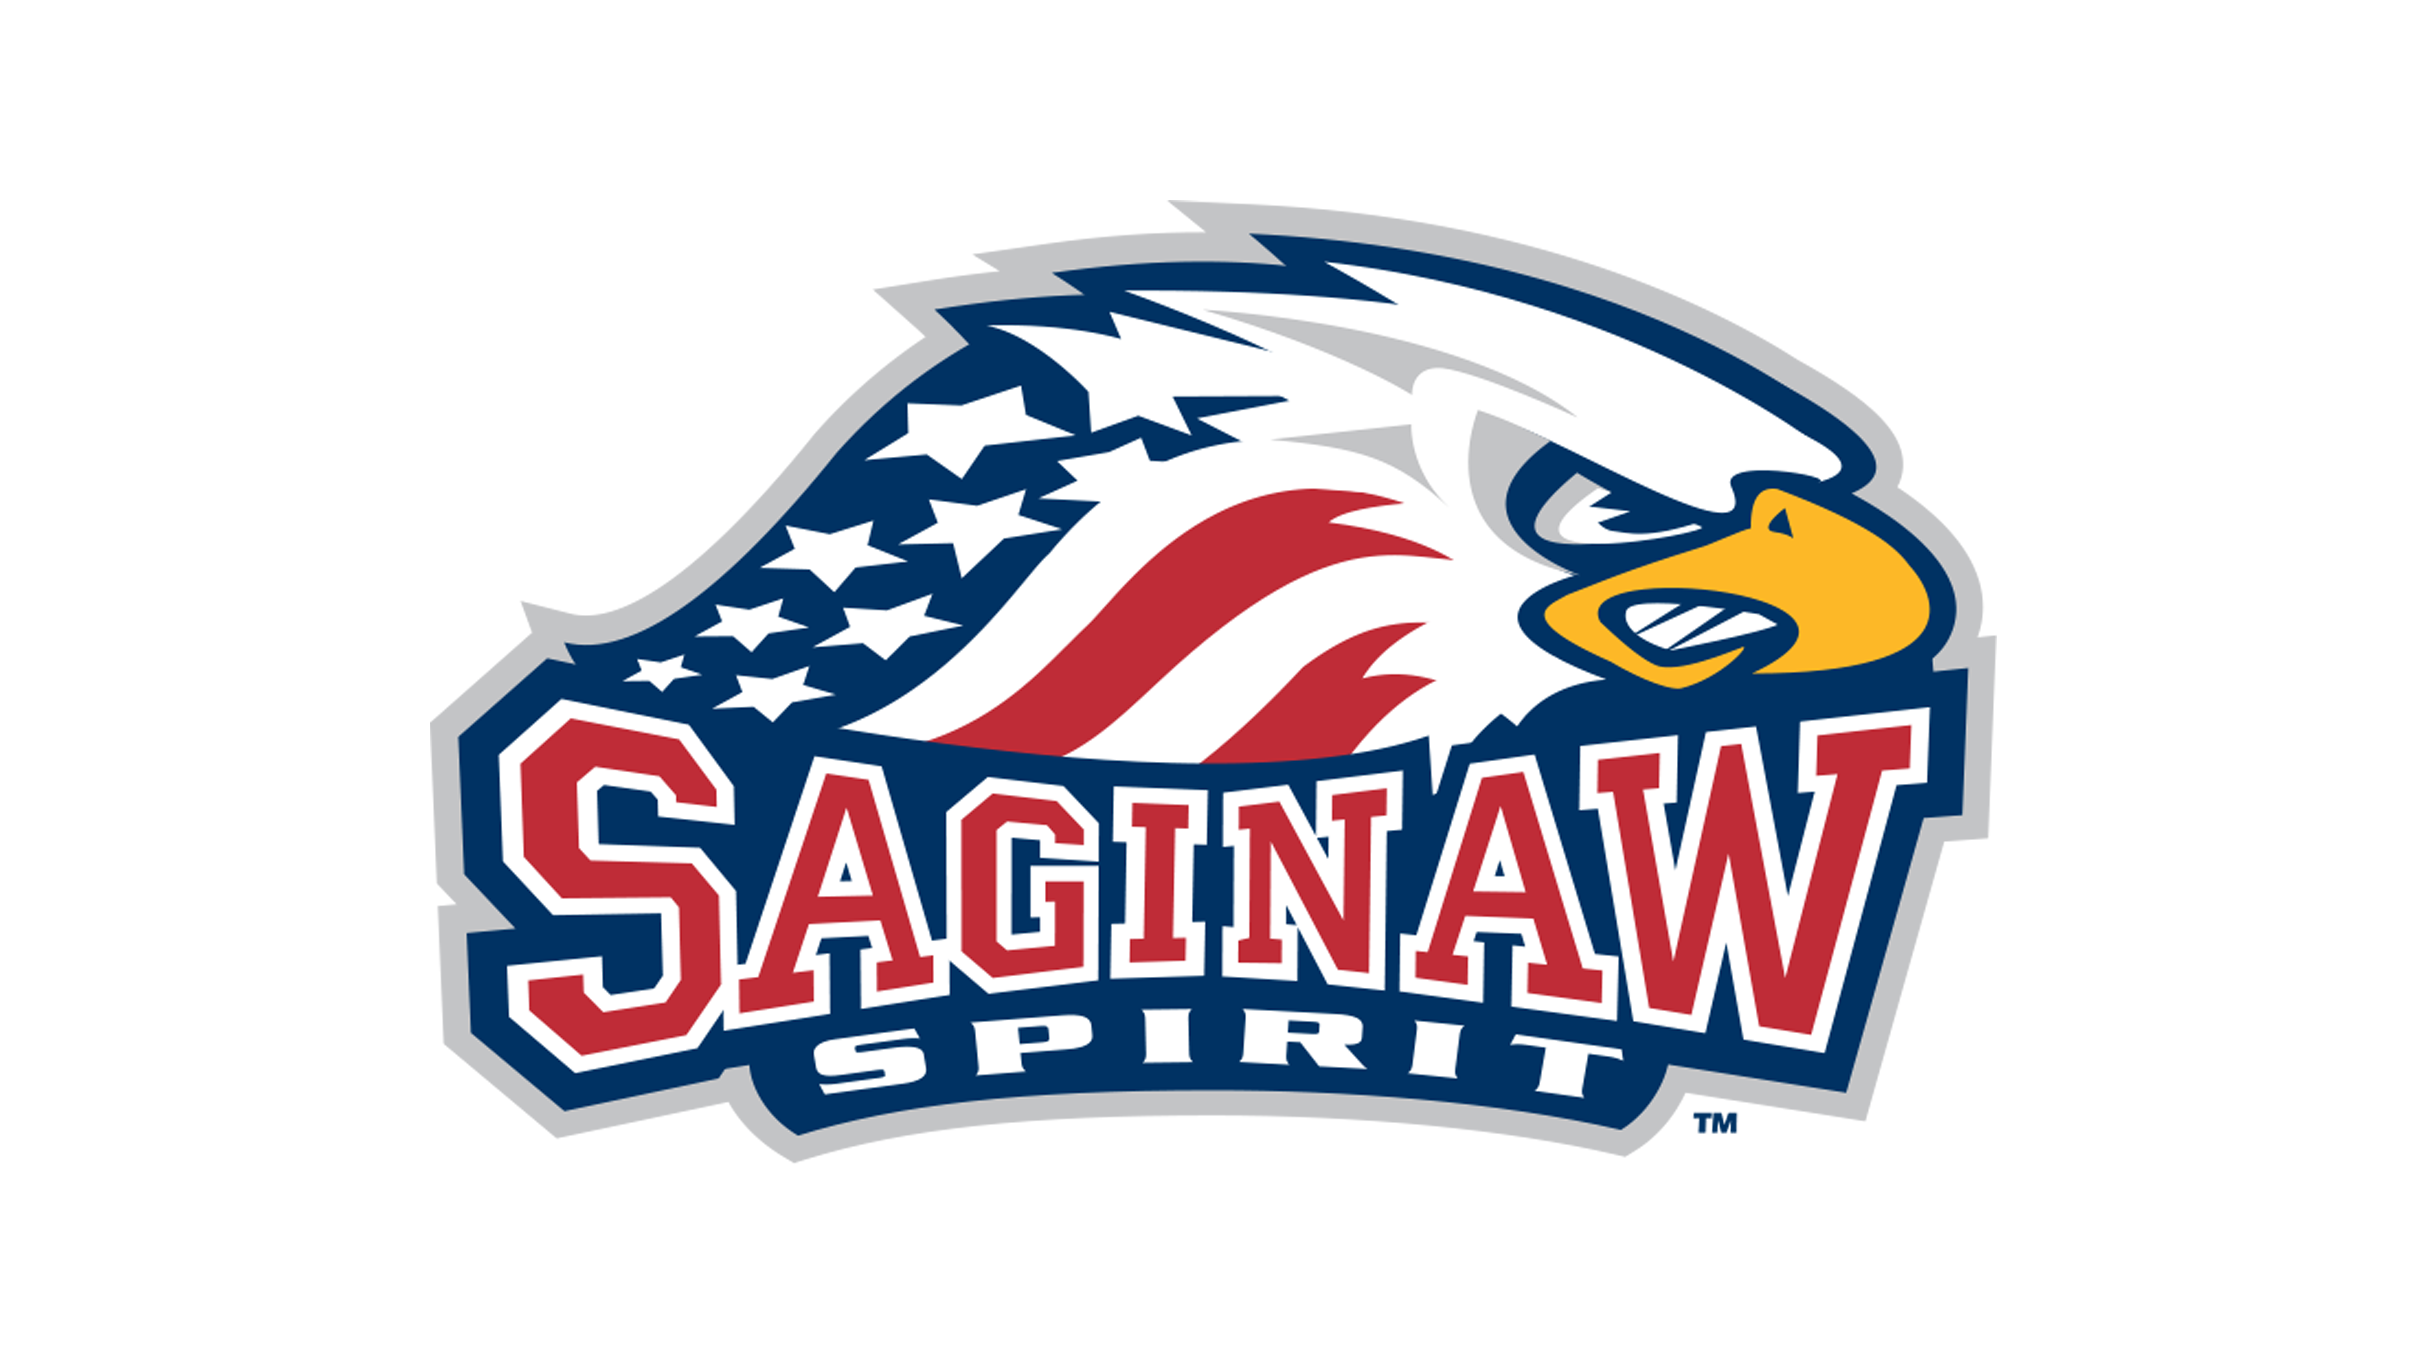 Saginaw Spirit at Dow Event Center